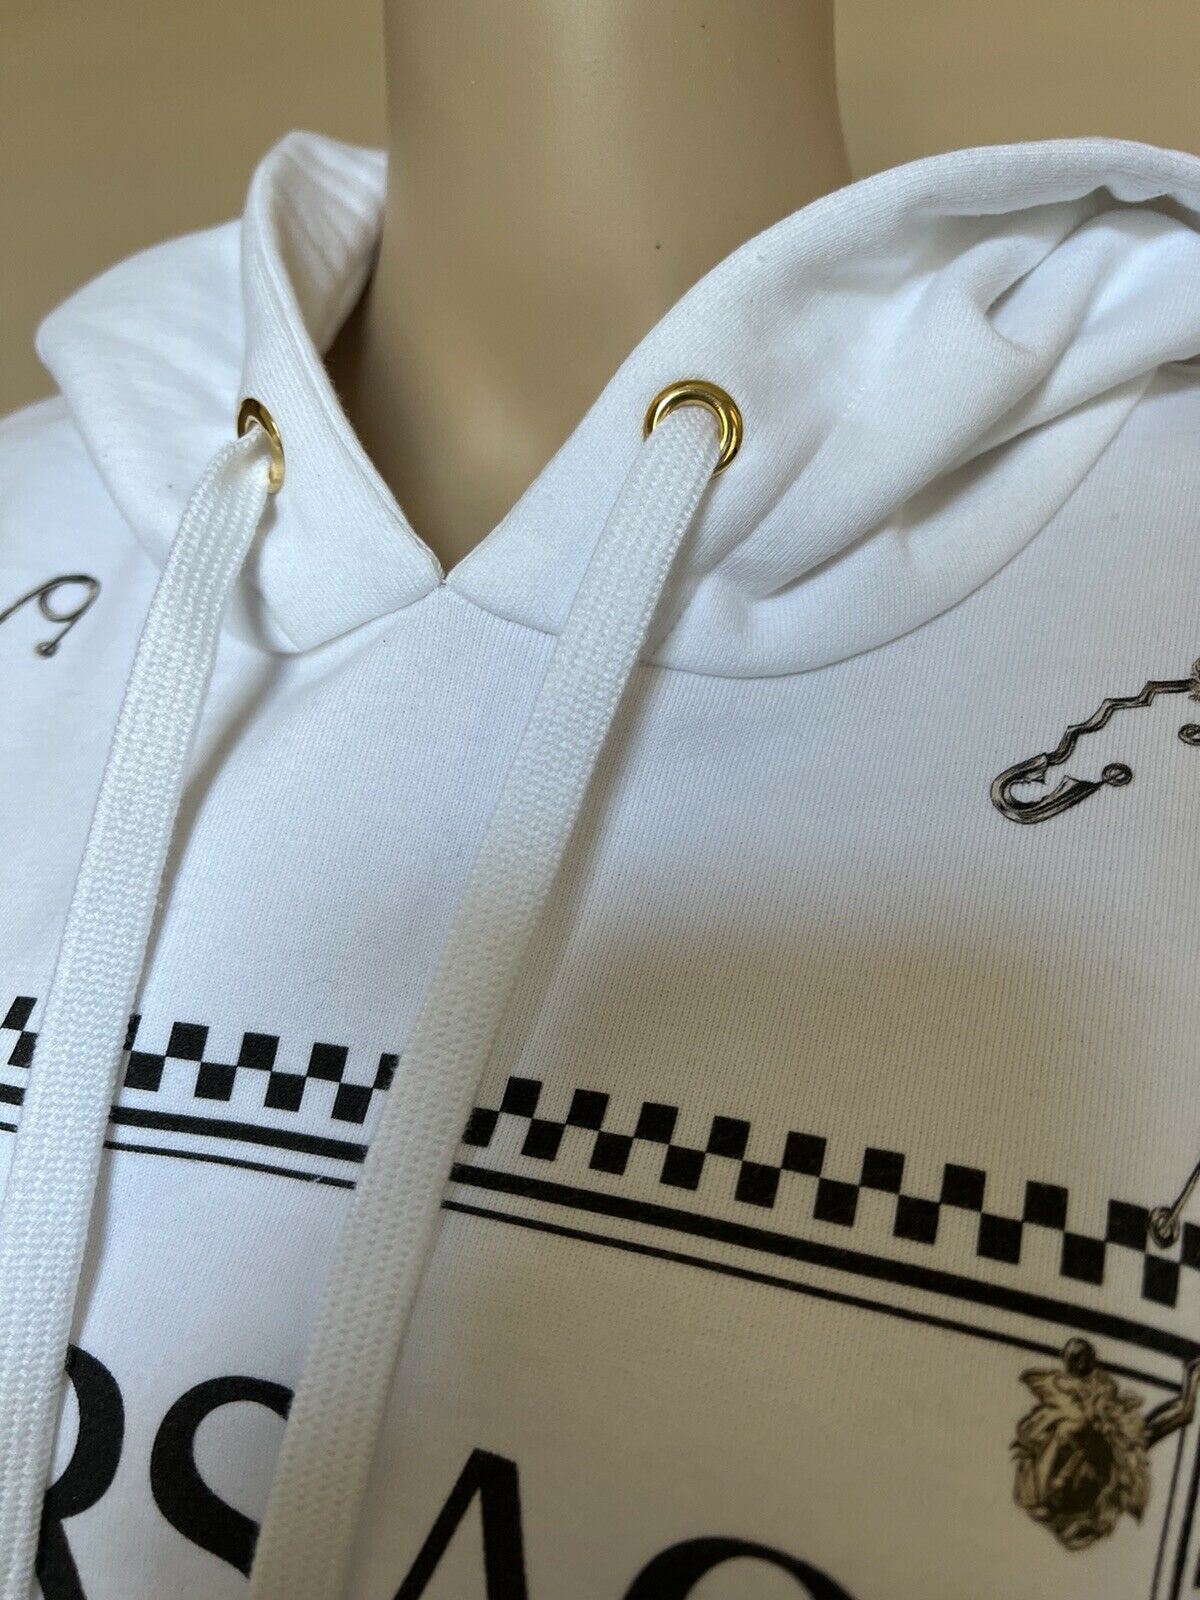 NWT $695 Versace Women's White Hoodie Sweater 12 US (46 Euro) Italy A83937